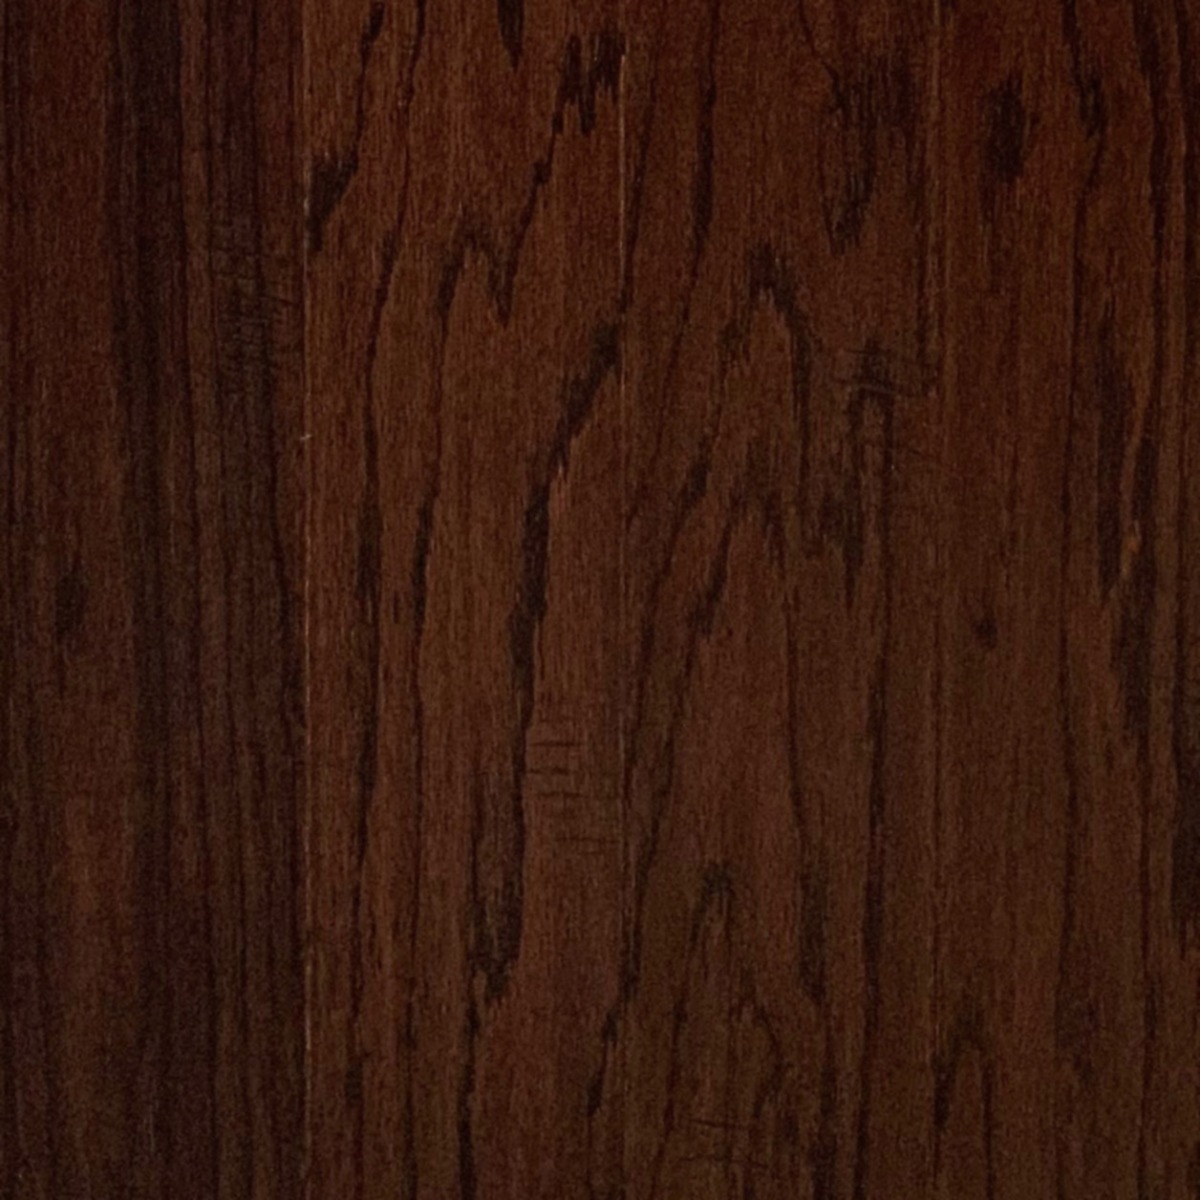 Bruce Collection Hardwood Flooring Oak, How To Care For Bruce Engineered Hardwood Floors